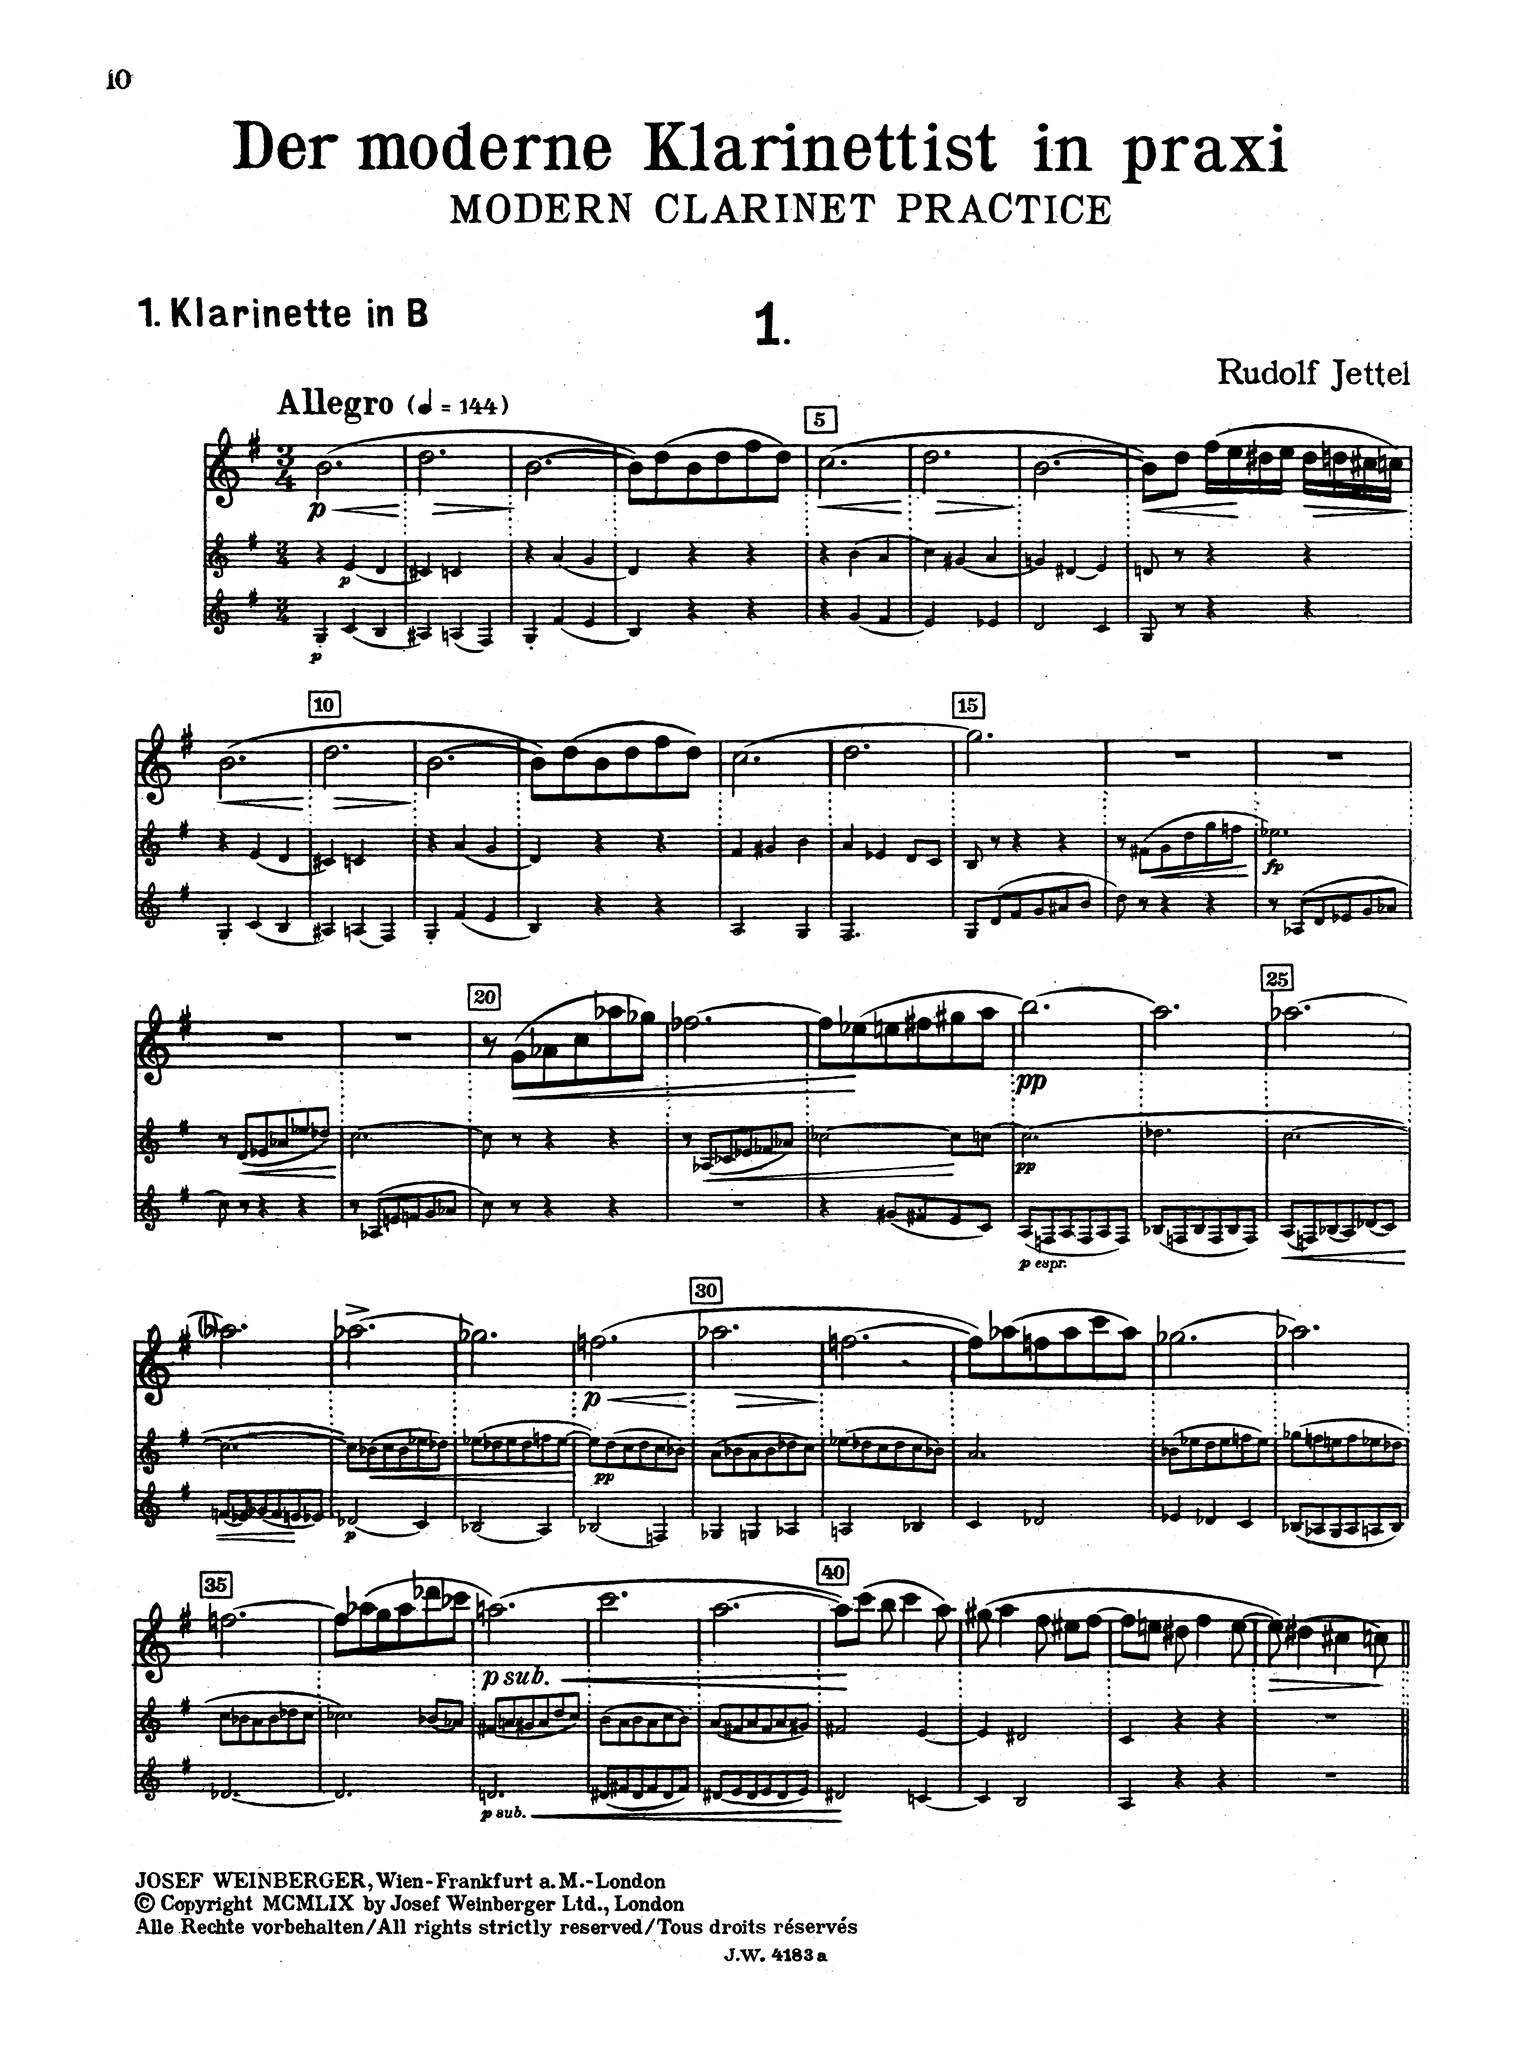 Modern Clarinet Practice, Book 1 Score: I